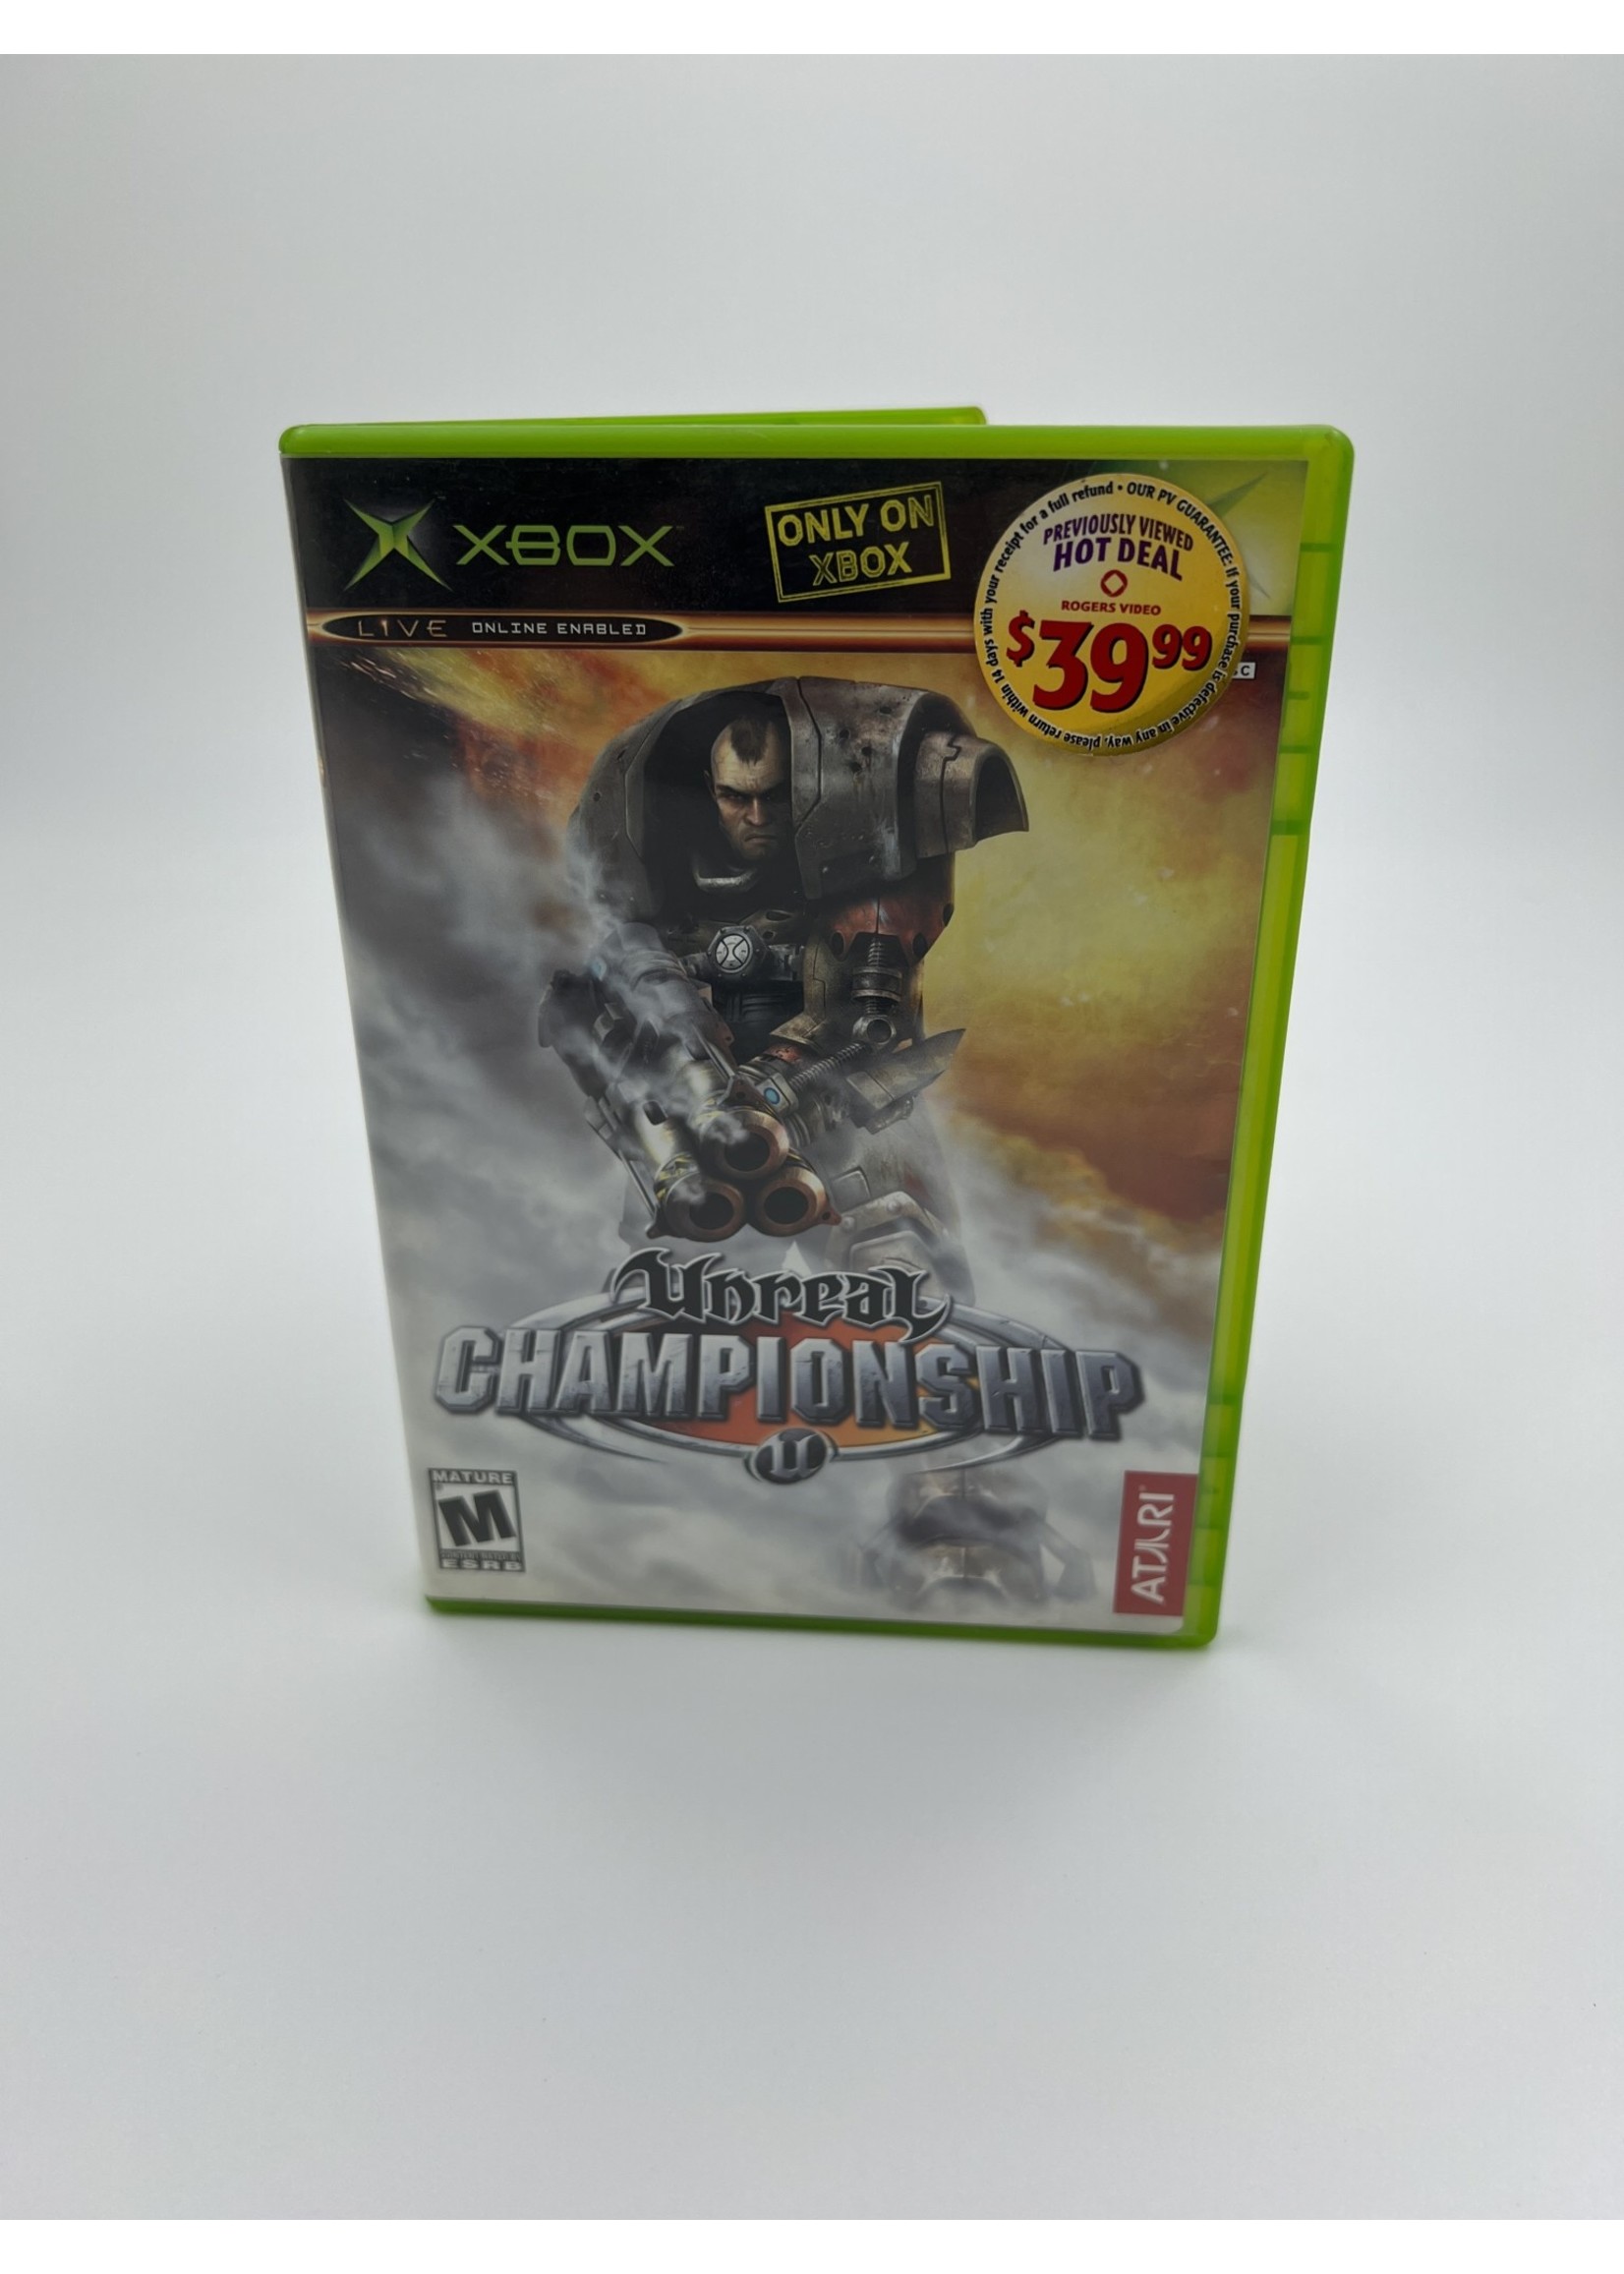 Xbox Unreal Championship Xbox